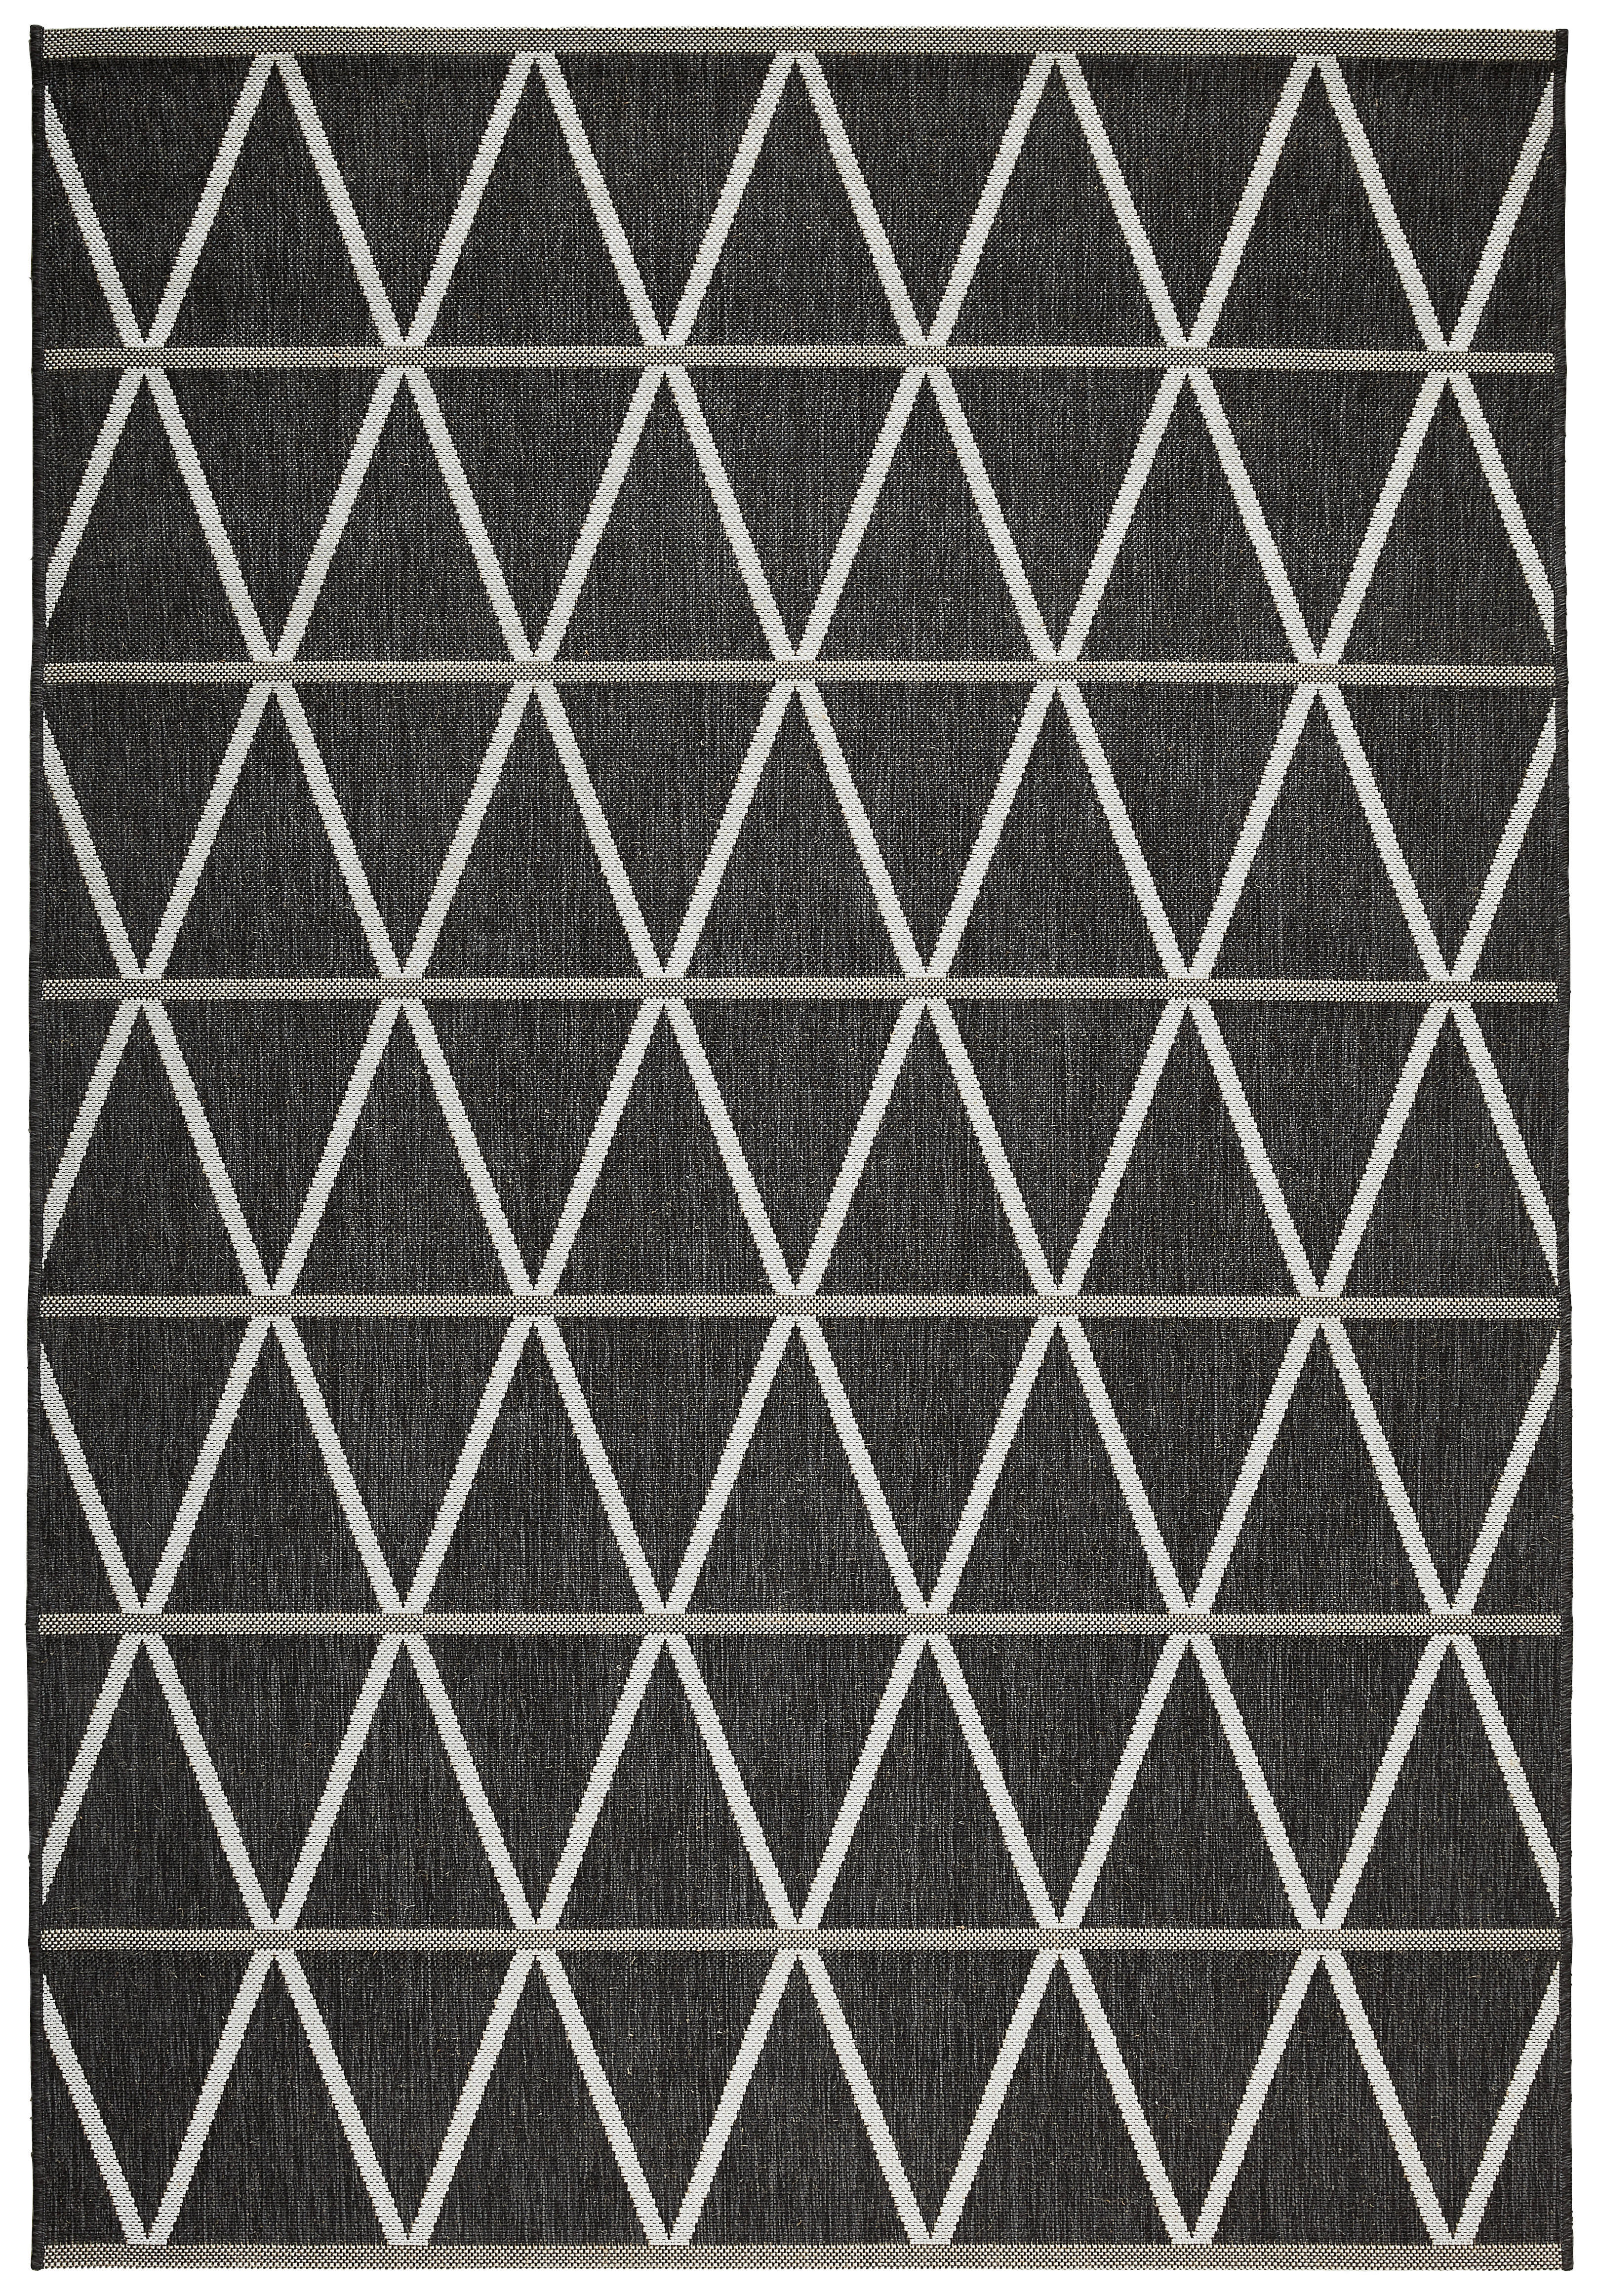 OUTDOORTEPPICH 120/170 cm Naturalle  - Schwarz/Grau, Design, Textil (120/170cm) - Novel